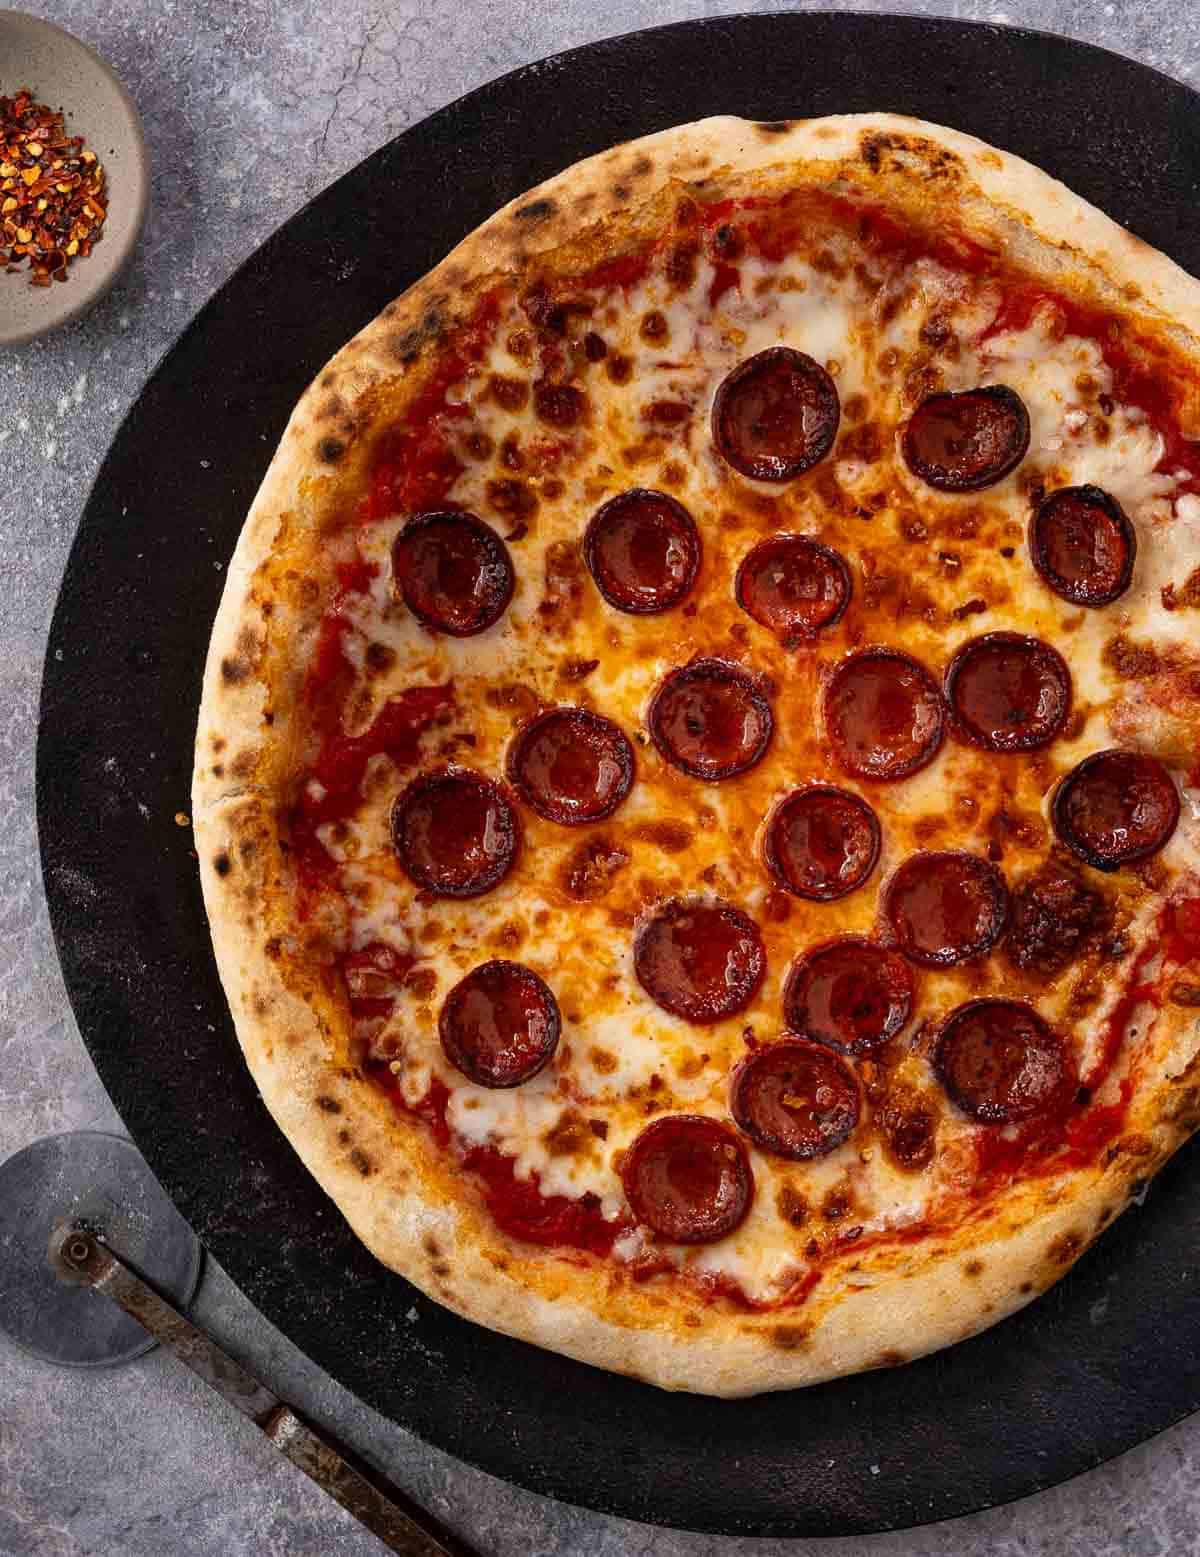 Sourdough pepperoni pizza on a plate.